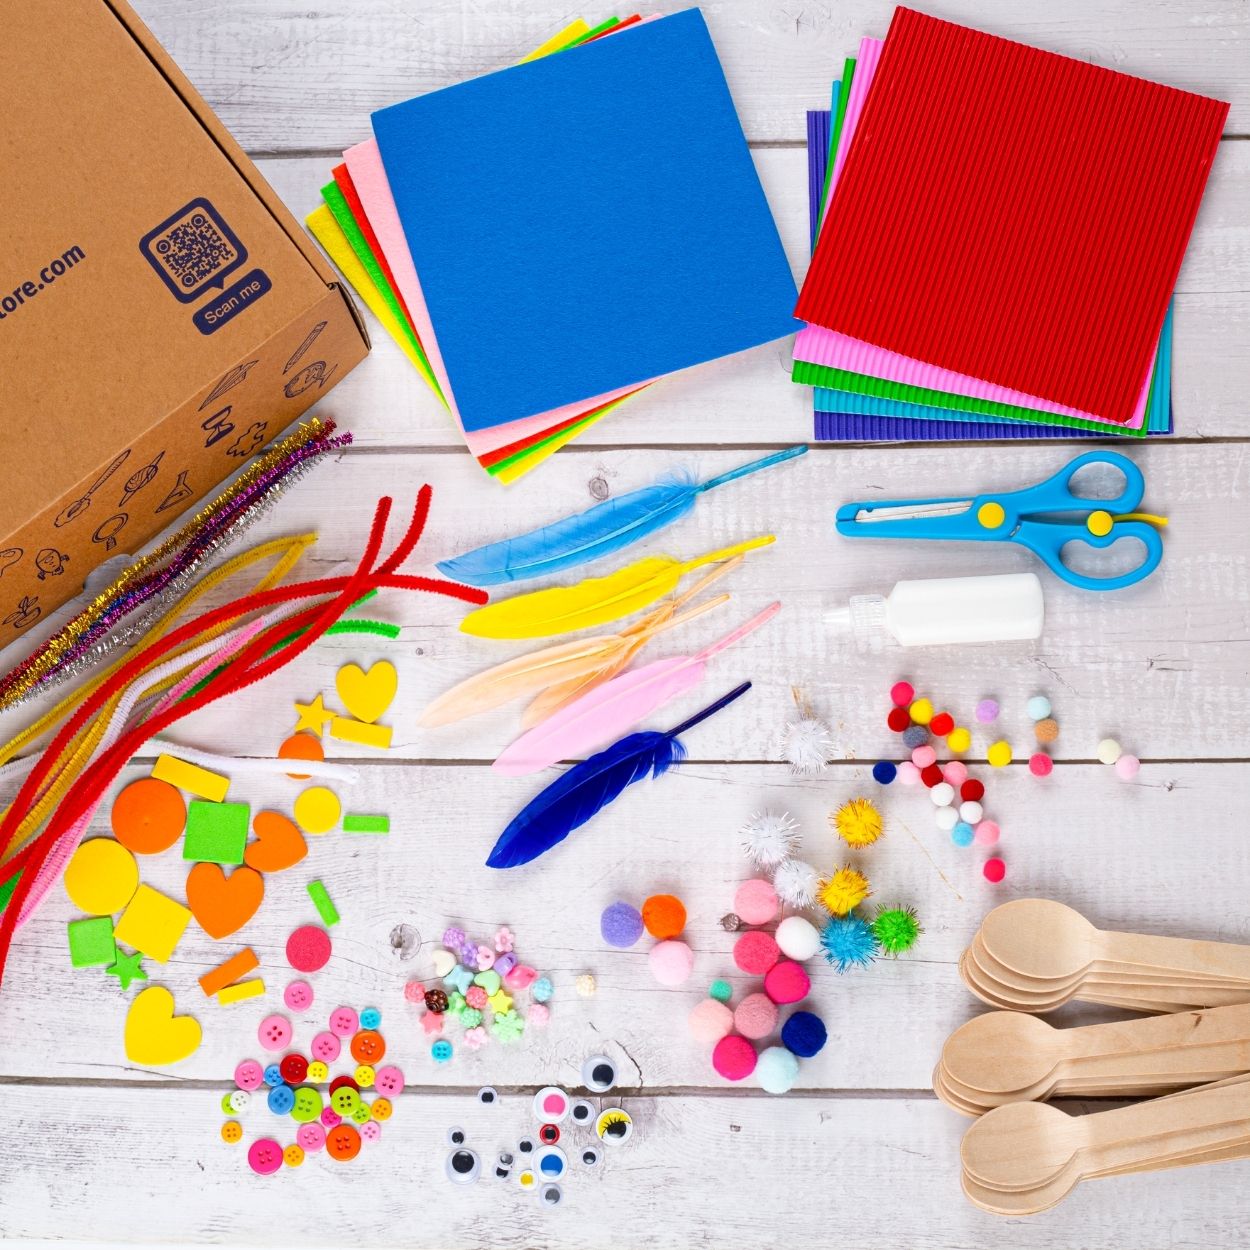 Art & Craft Activity Kit for Kids